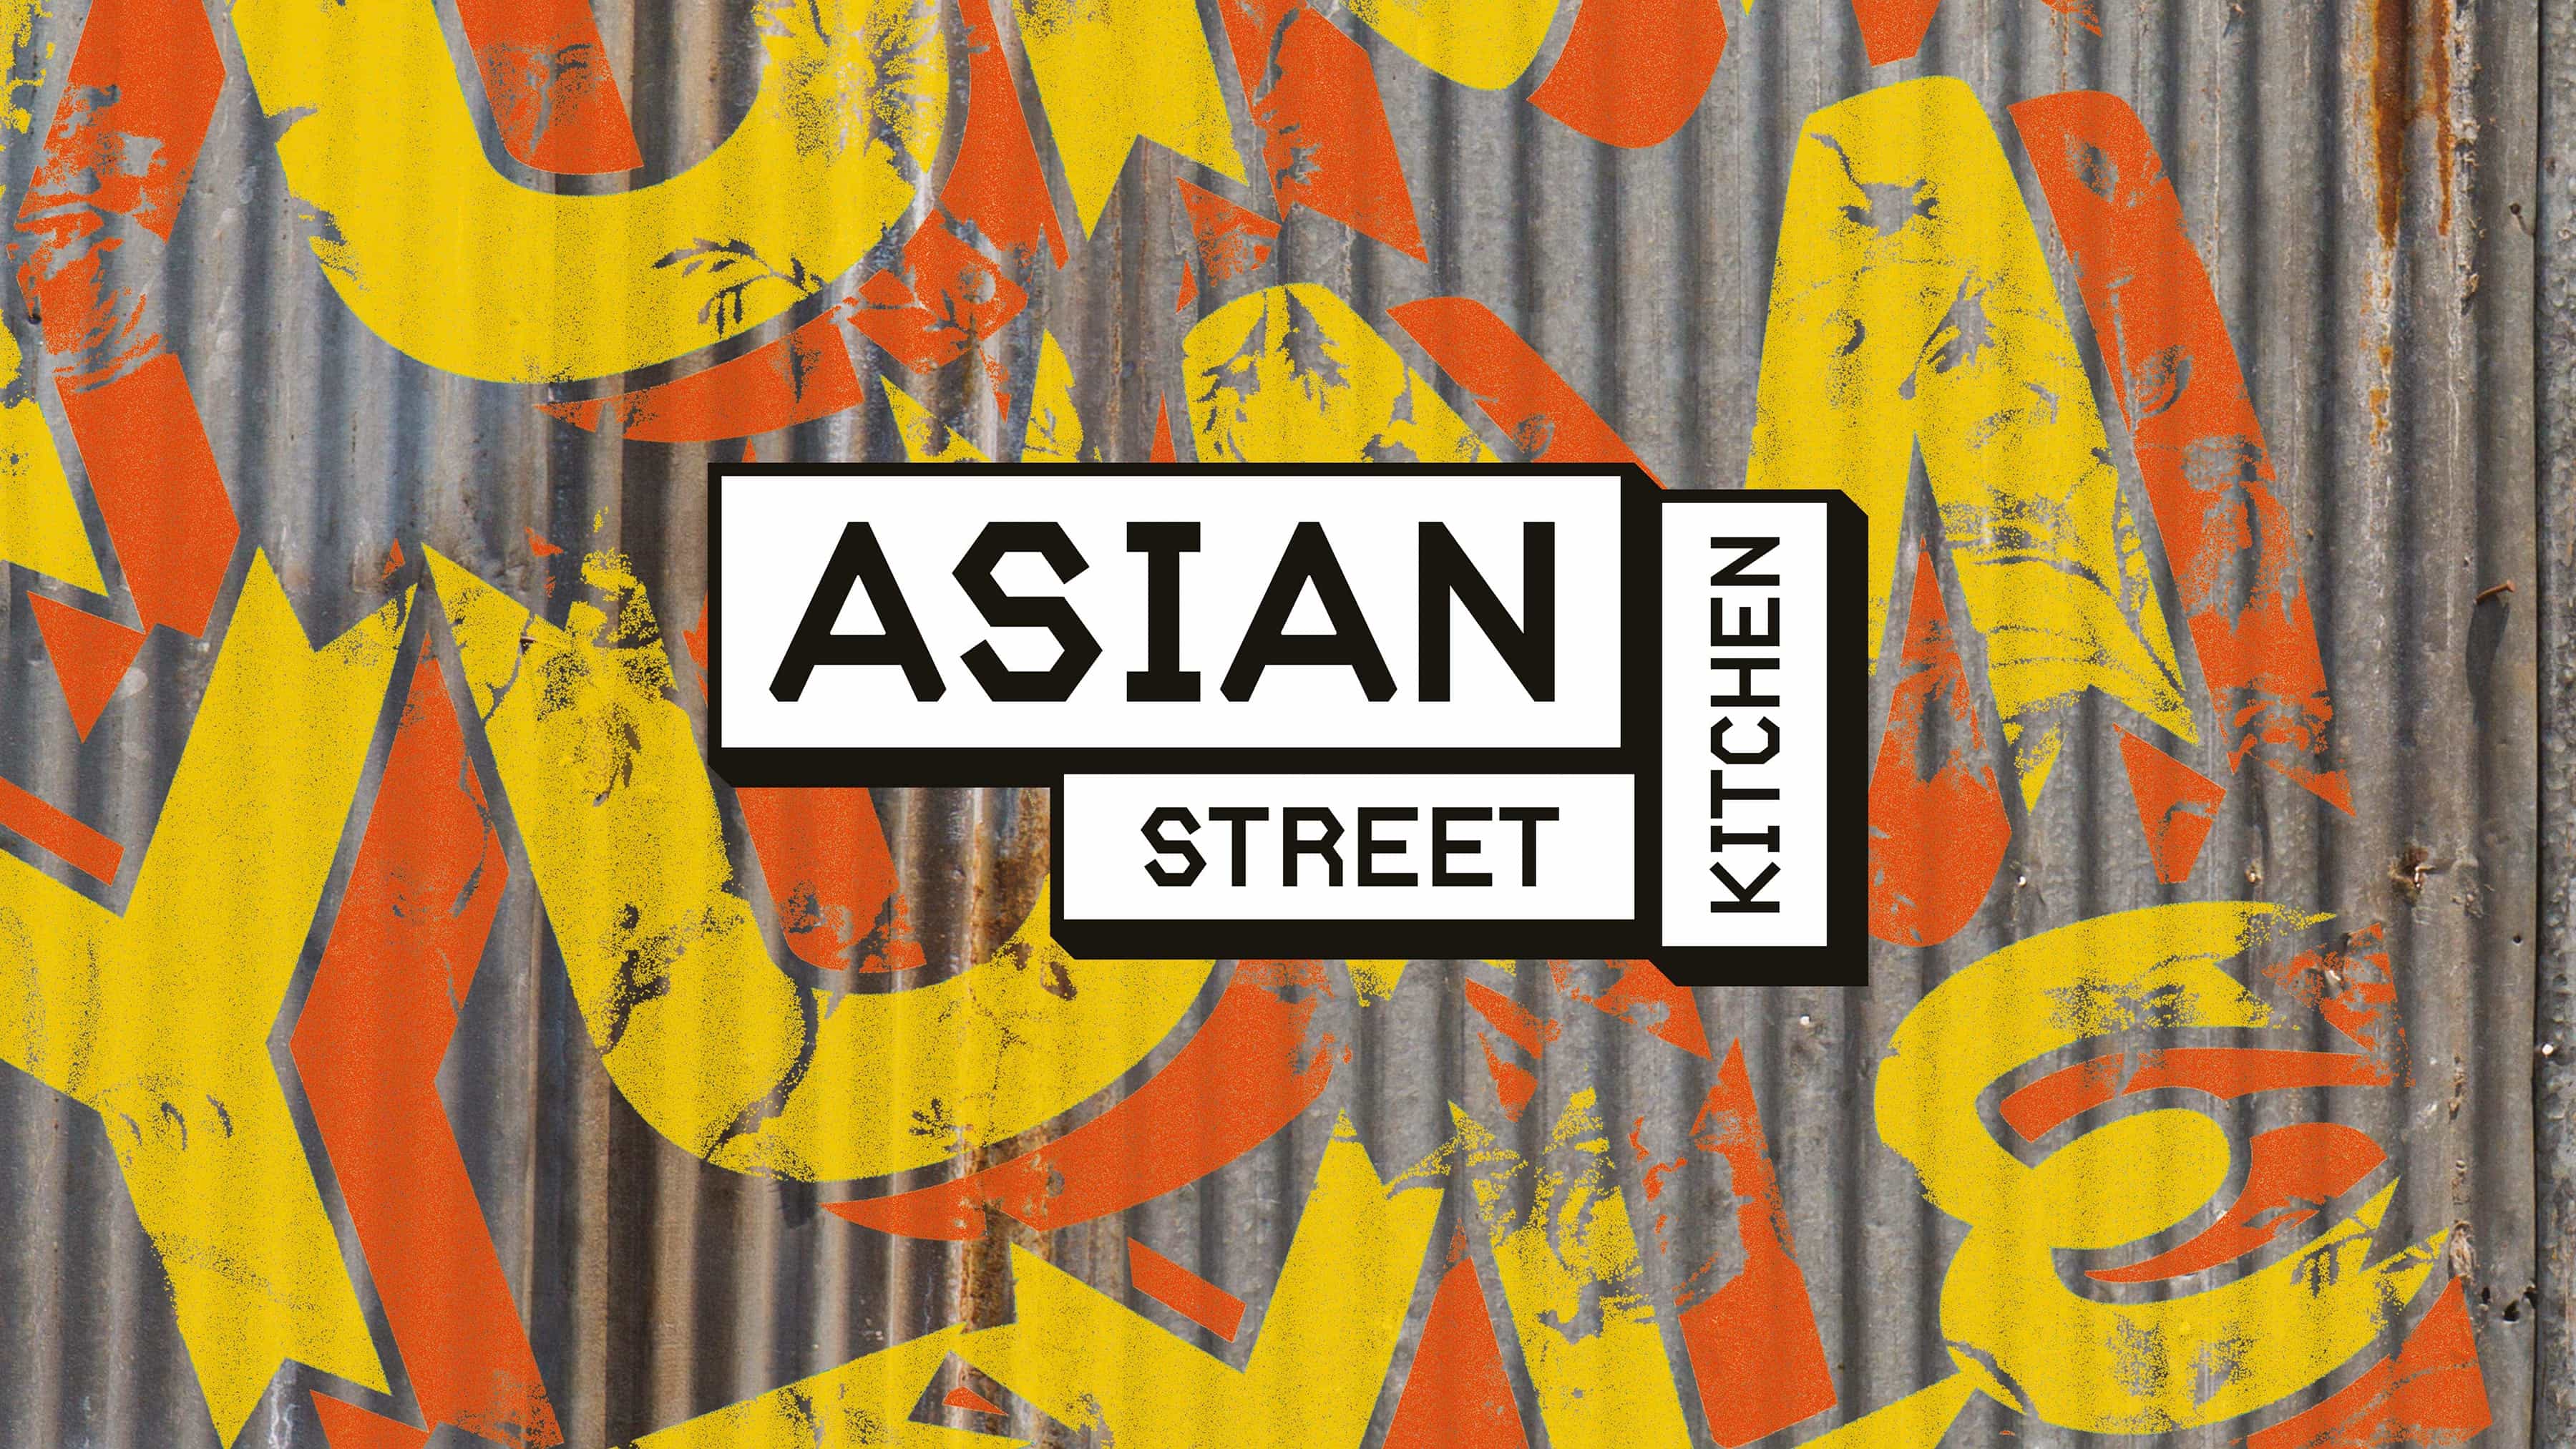 JansenHarris Designs Vibrant Brand Identity for Asian Street Kitchen